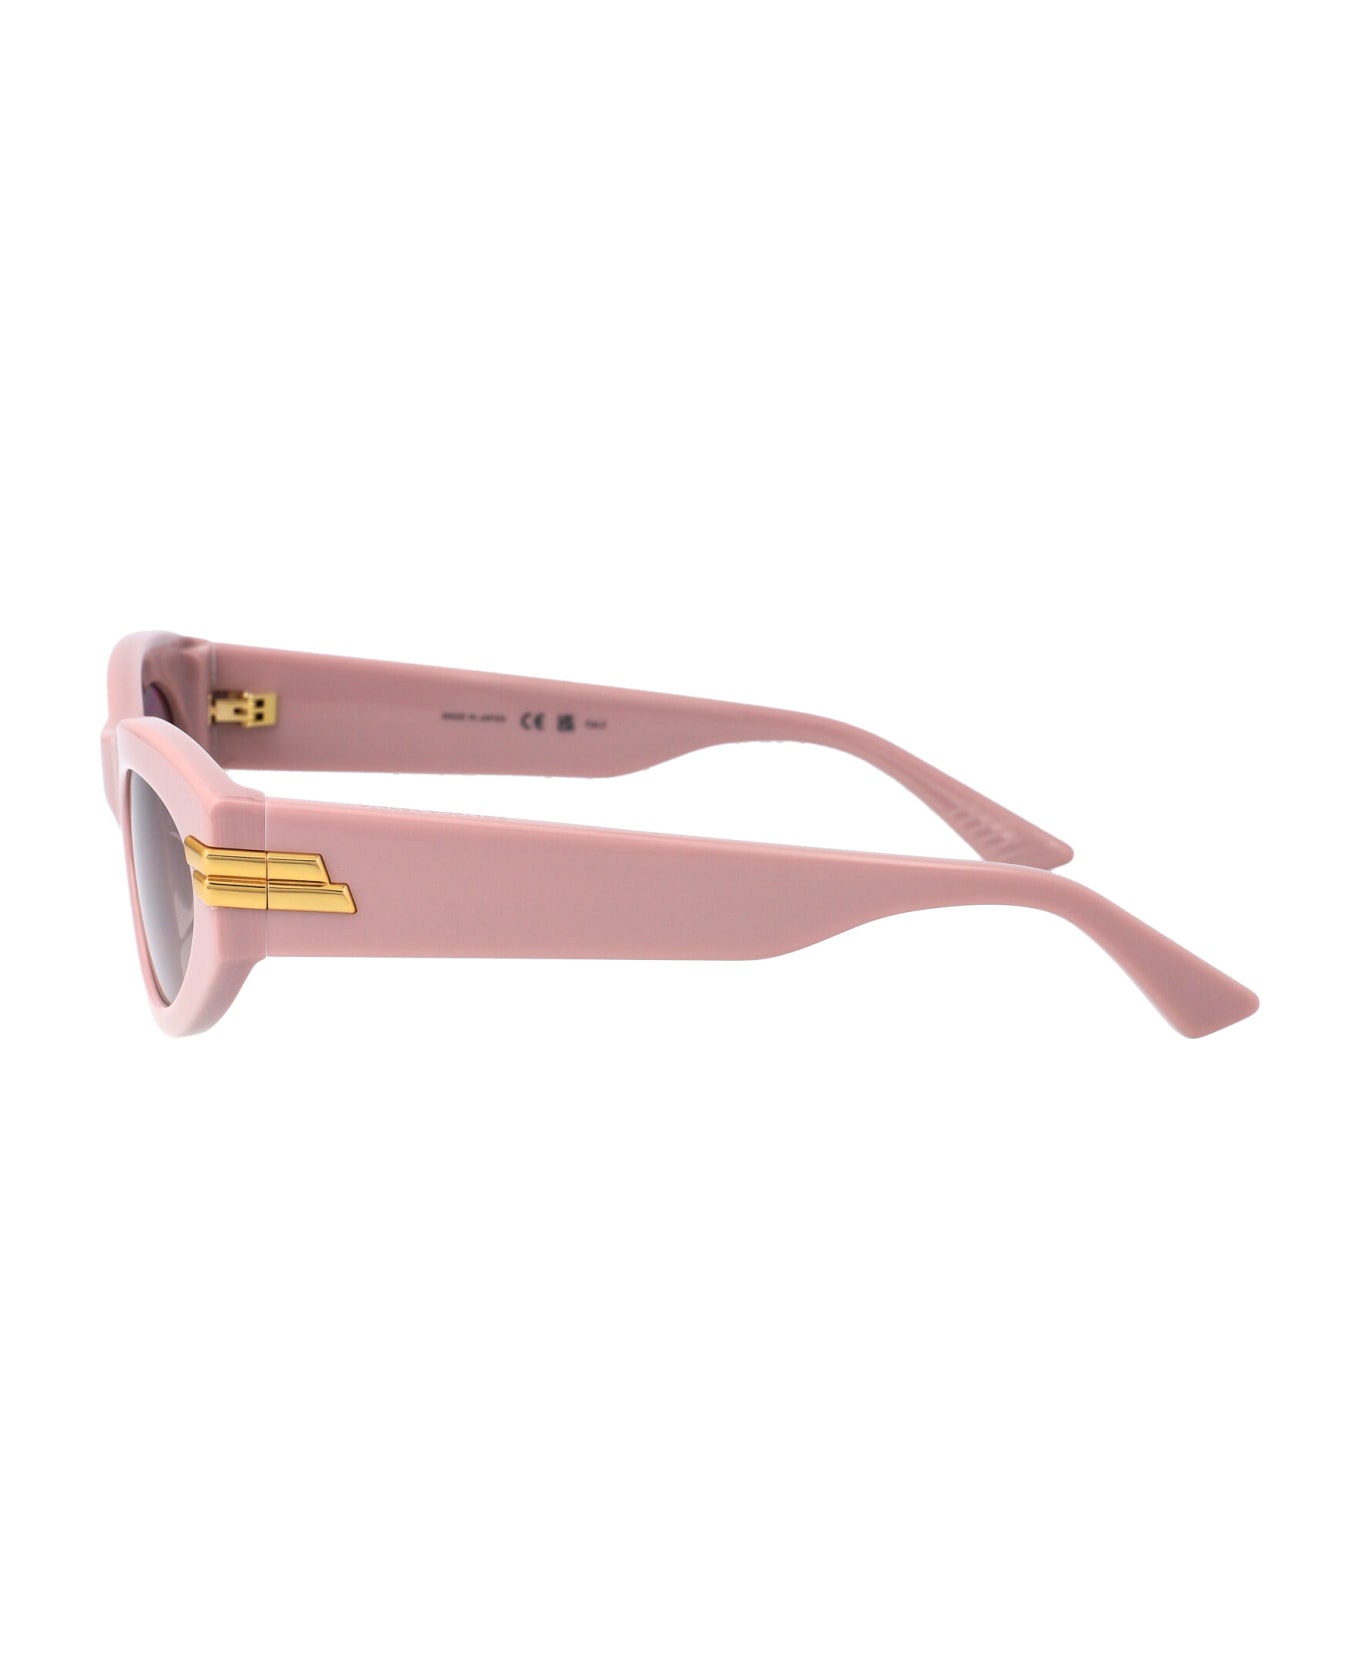 Bottega Veneta Eyewear Bv1189s Sunglasses - 006 PINK PINK VIOLET サングラス